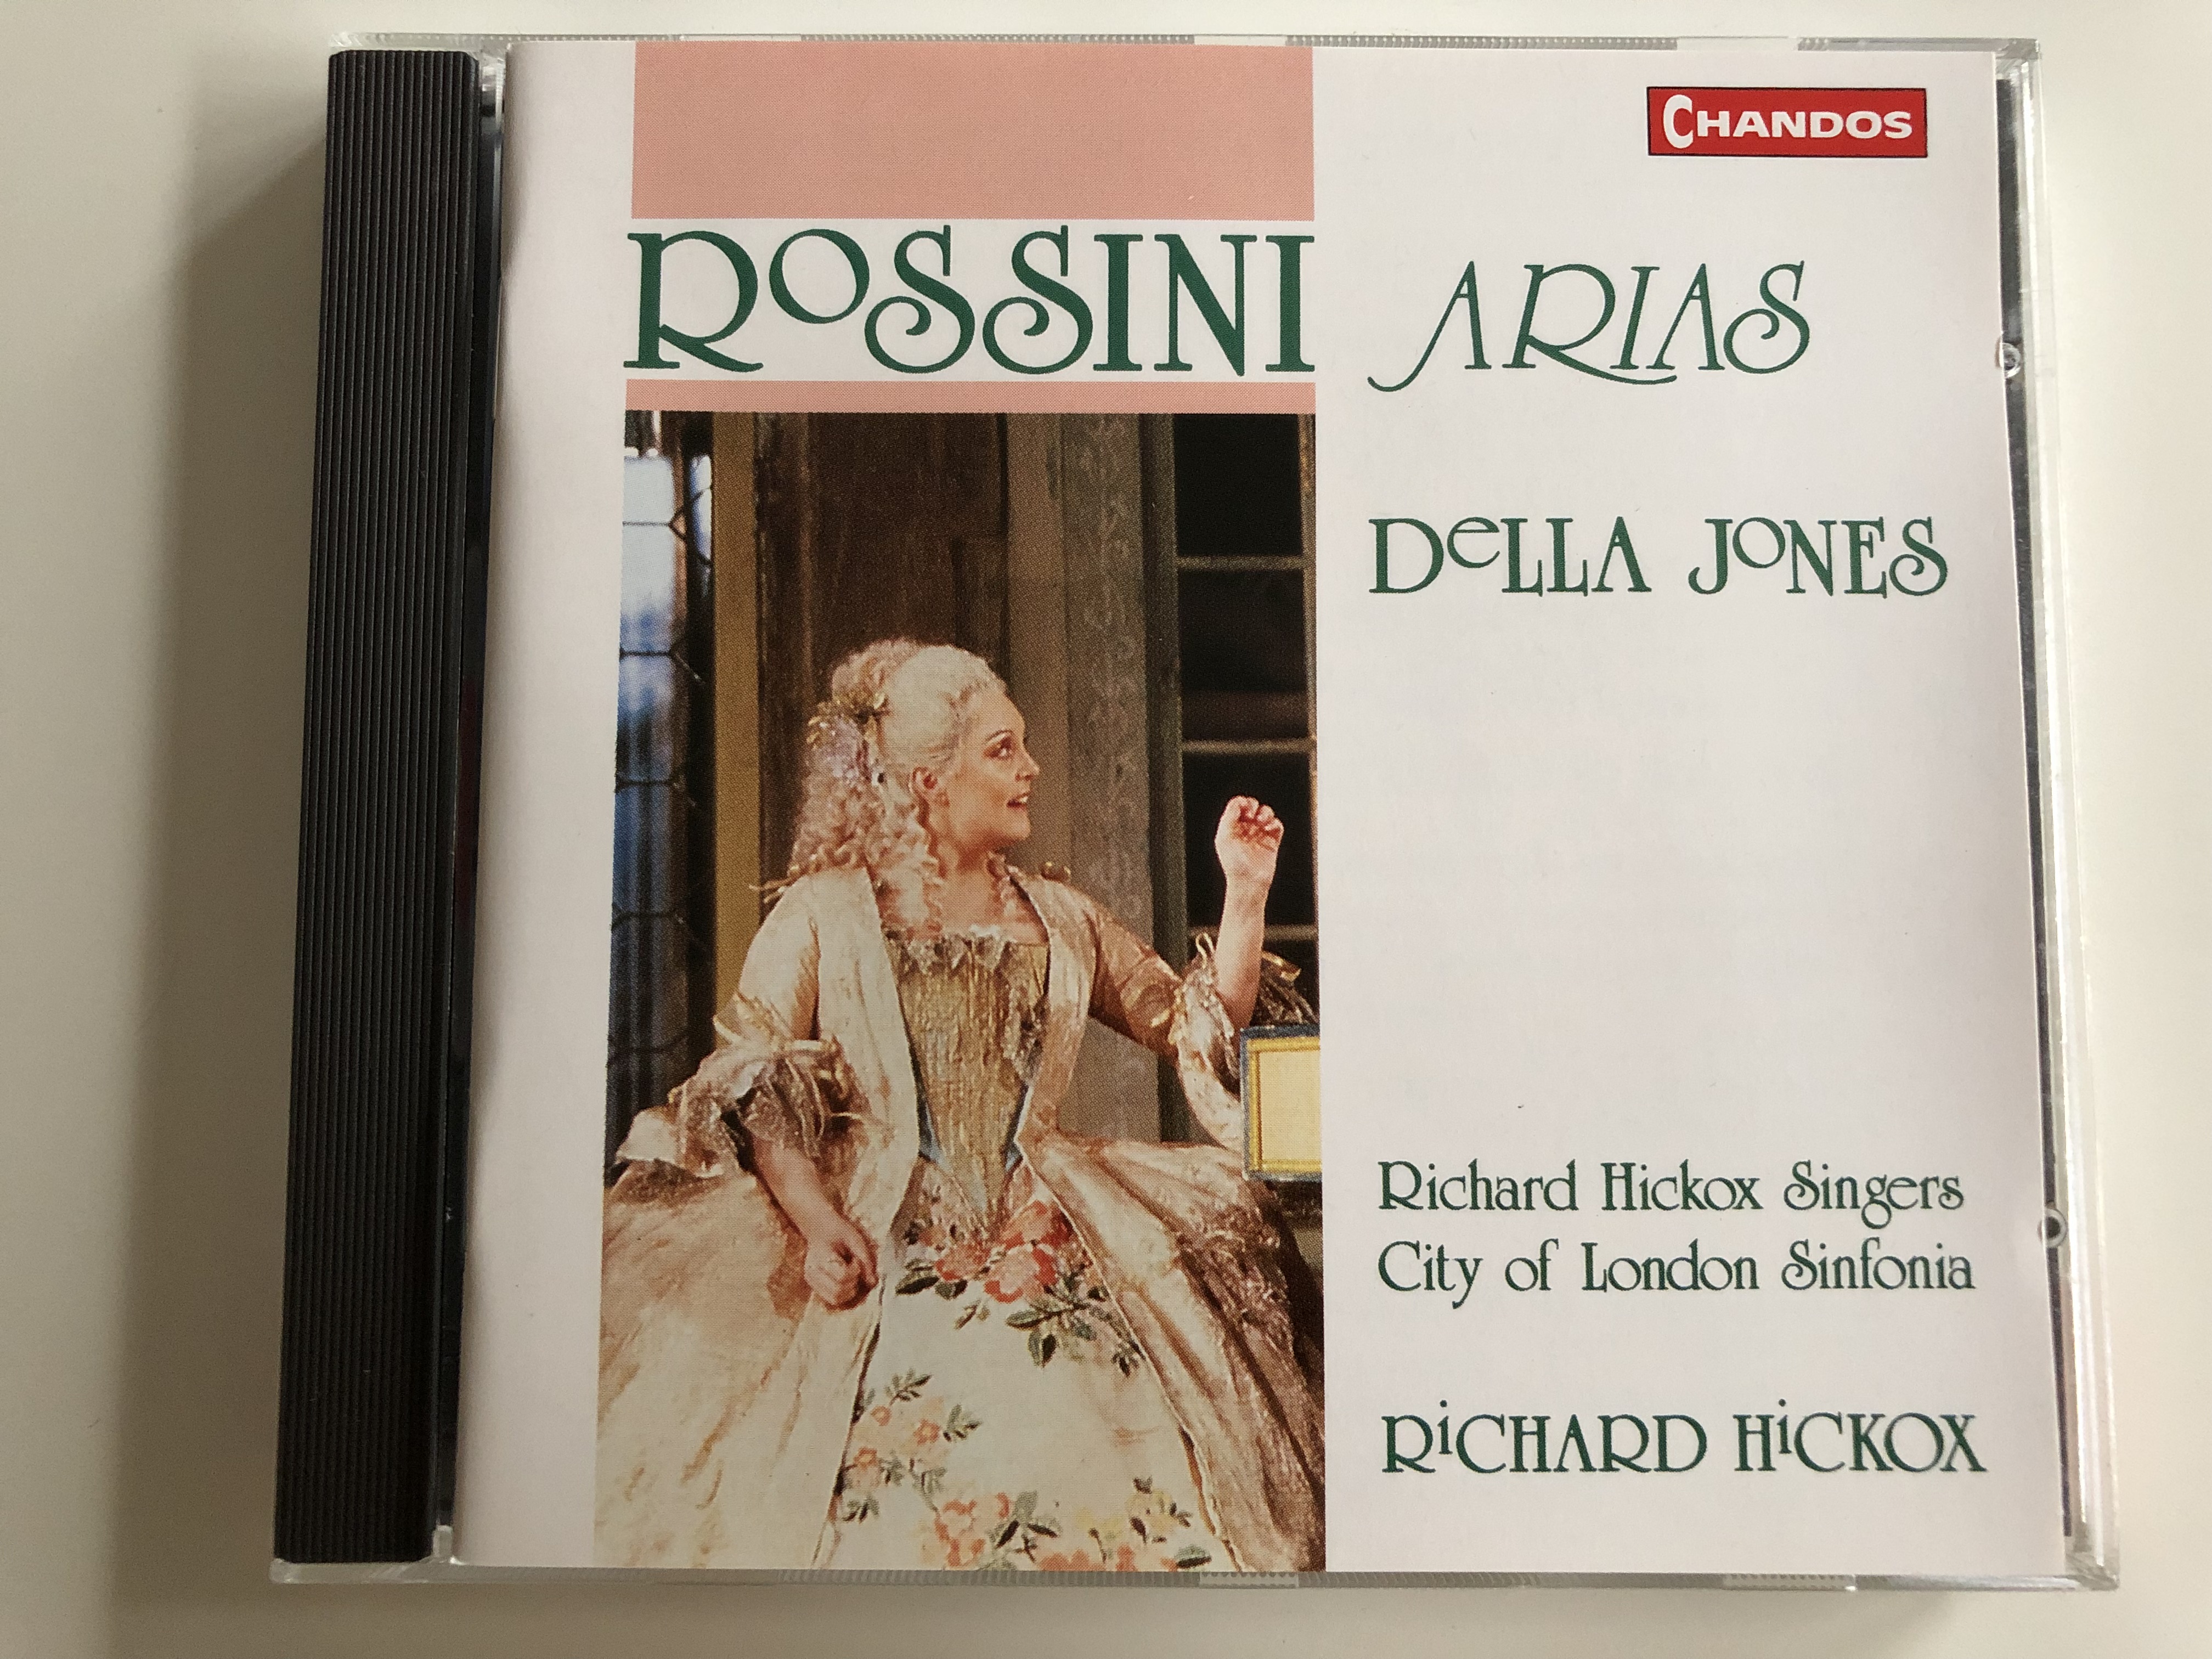 rossini-arias-della-jones-richard-hickox-singers-city-of-london-sinfonia-chandos-audio-cd-1990-chan-8865-1-.jpg